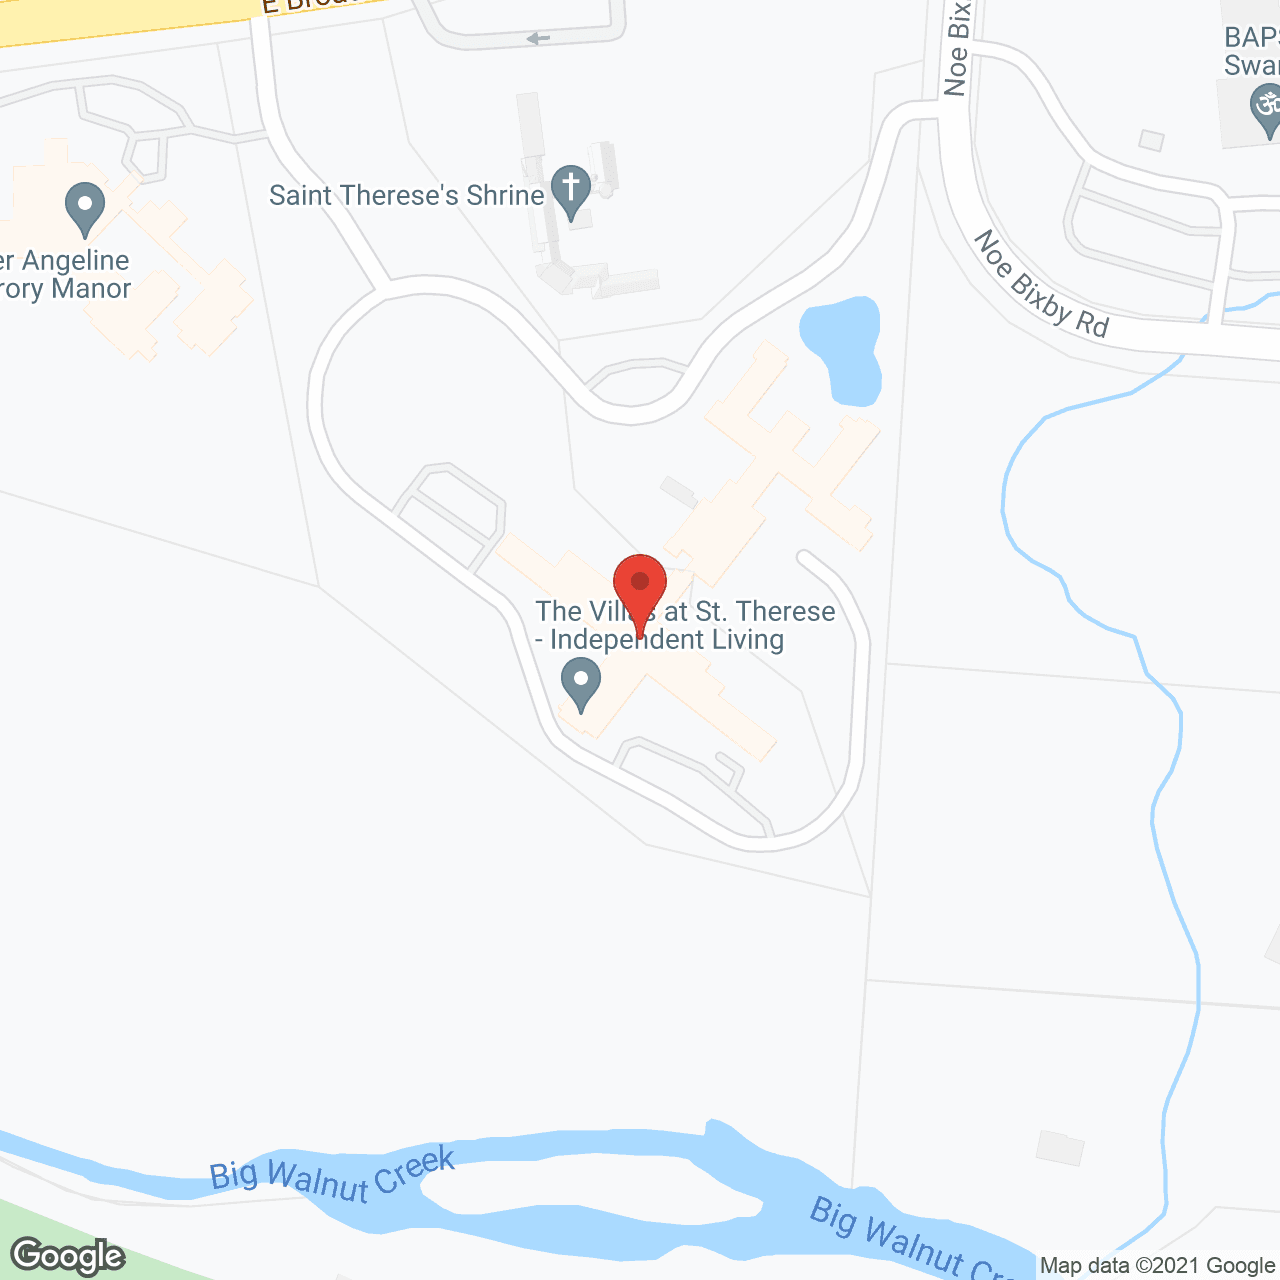 The Villas At Saintrese in google map